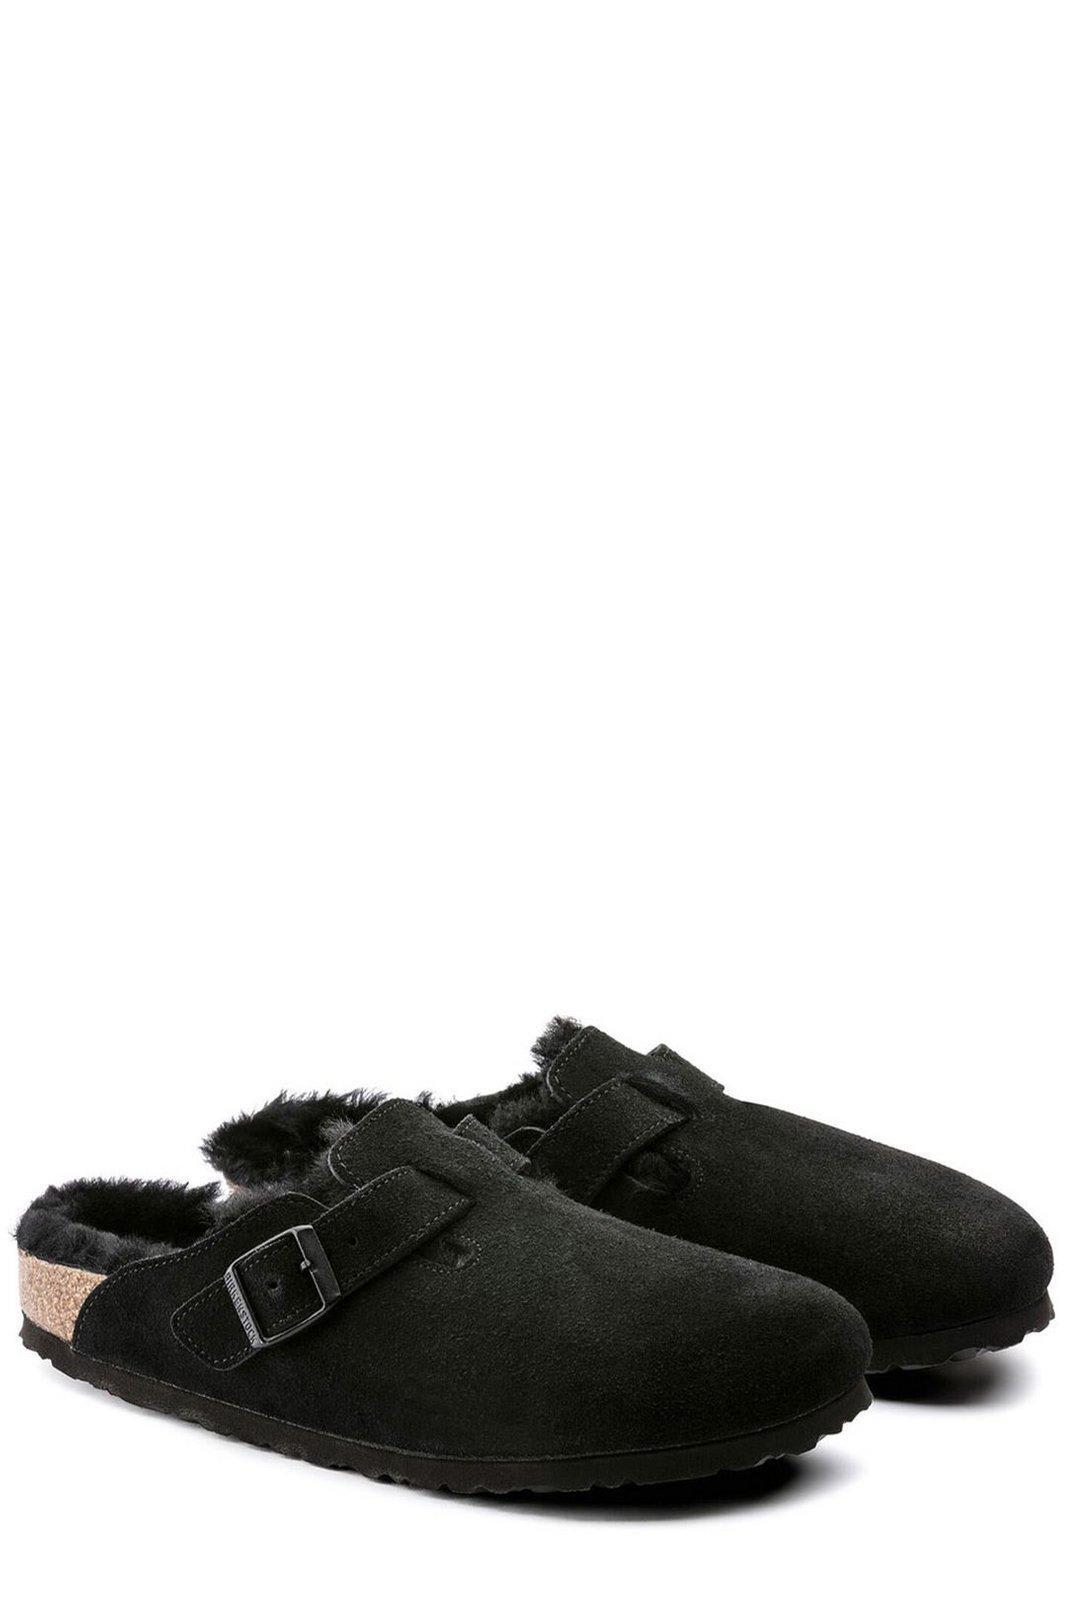 Birkenstock Boston Slip-on Sandals in Black | Lyst